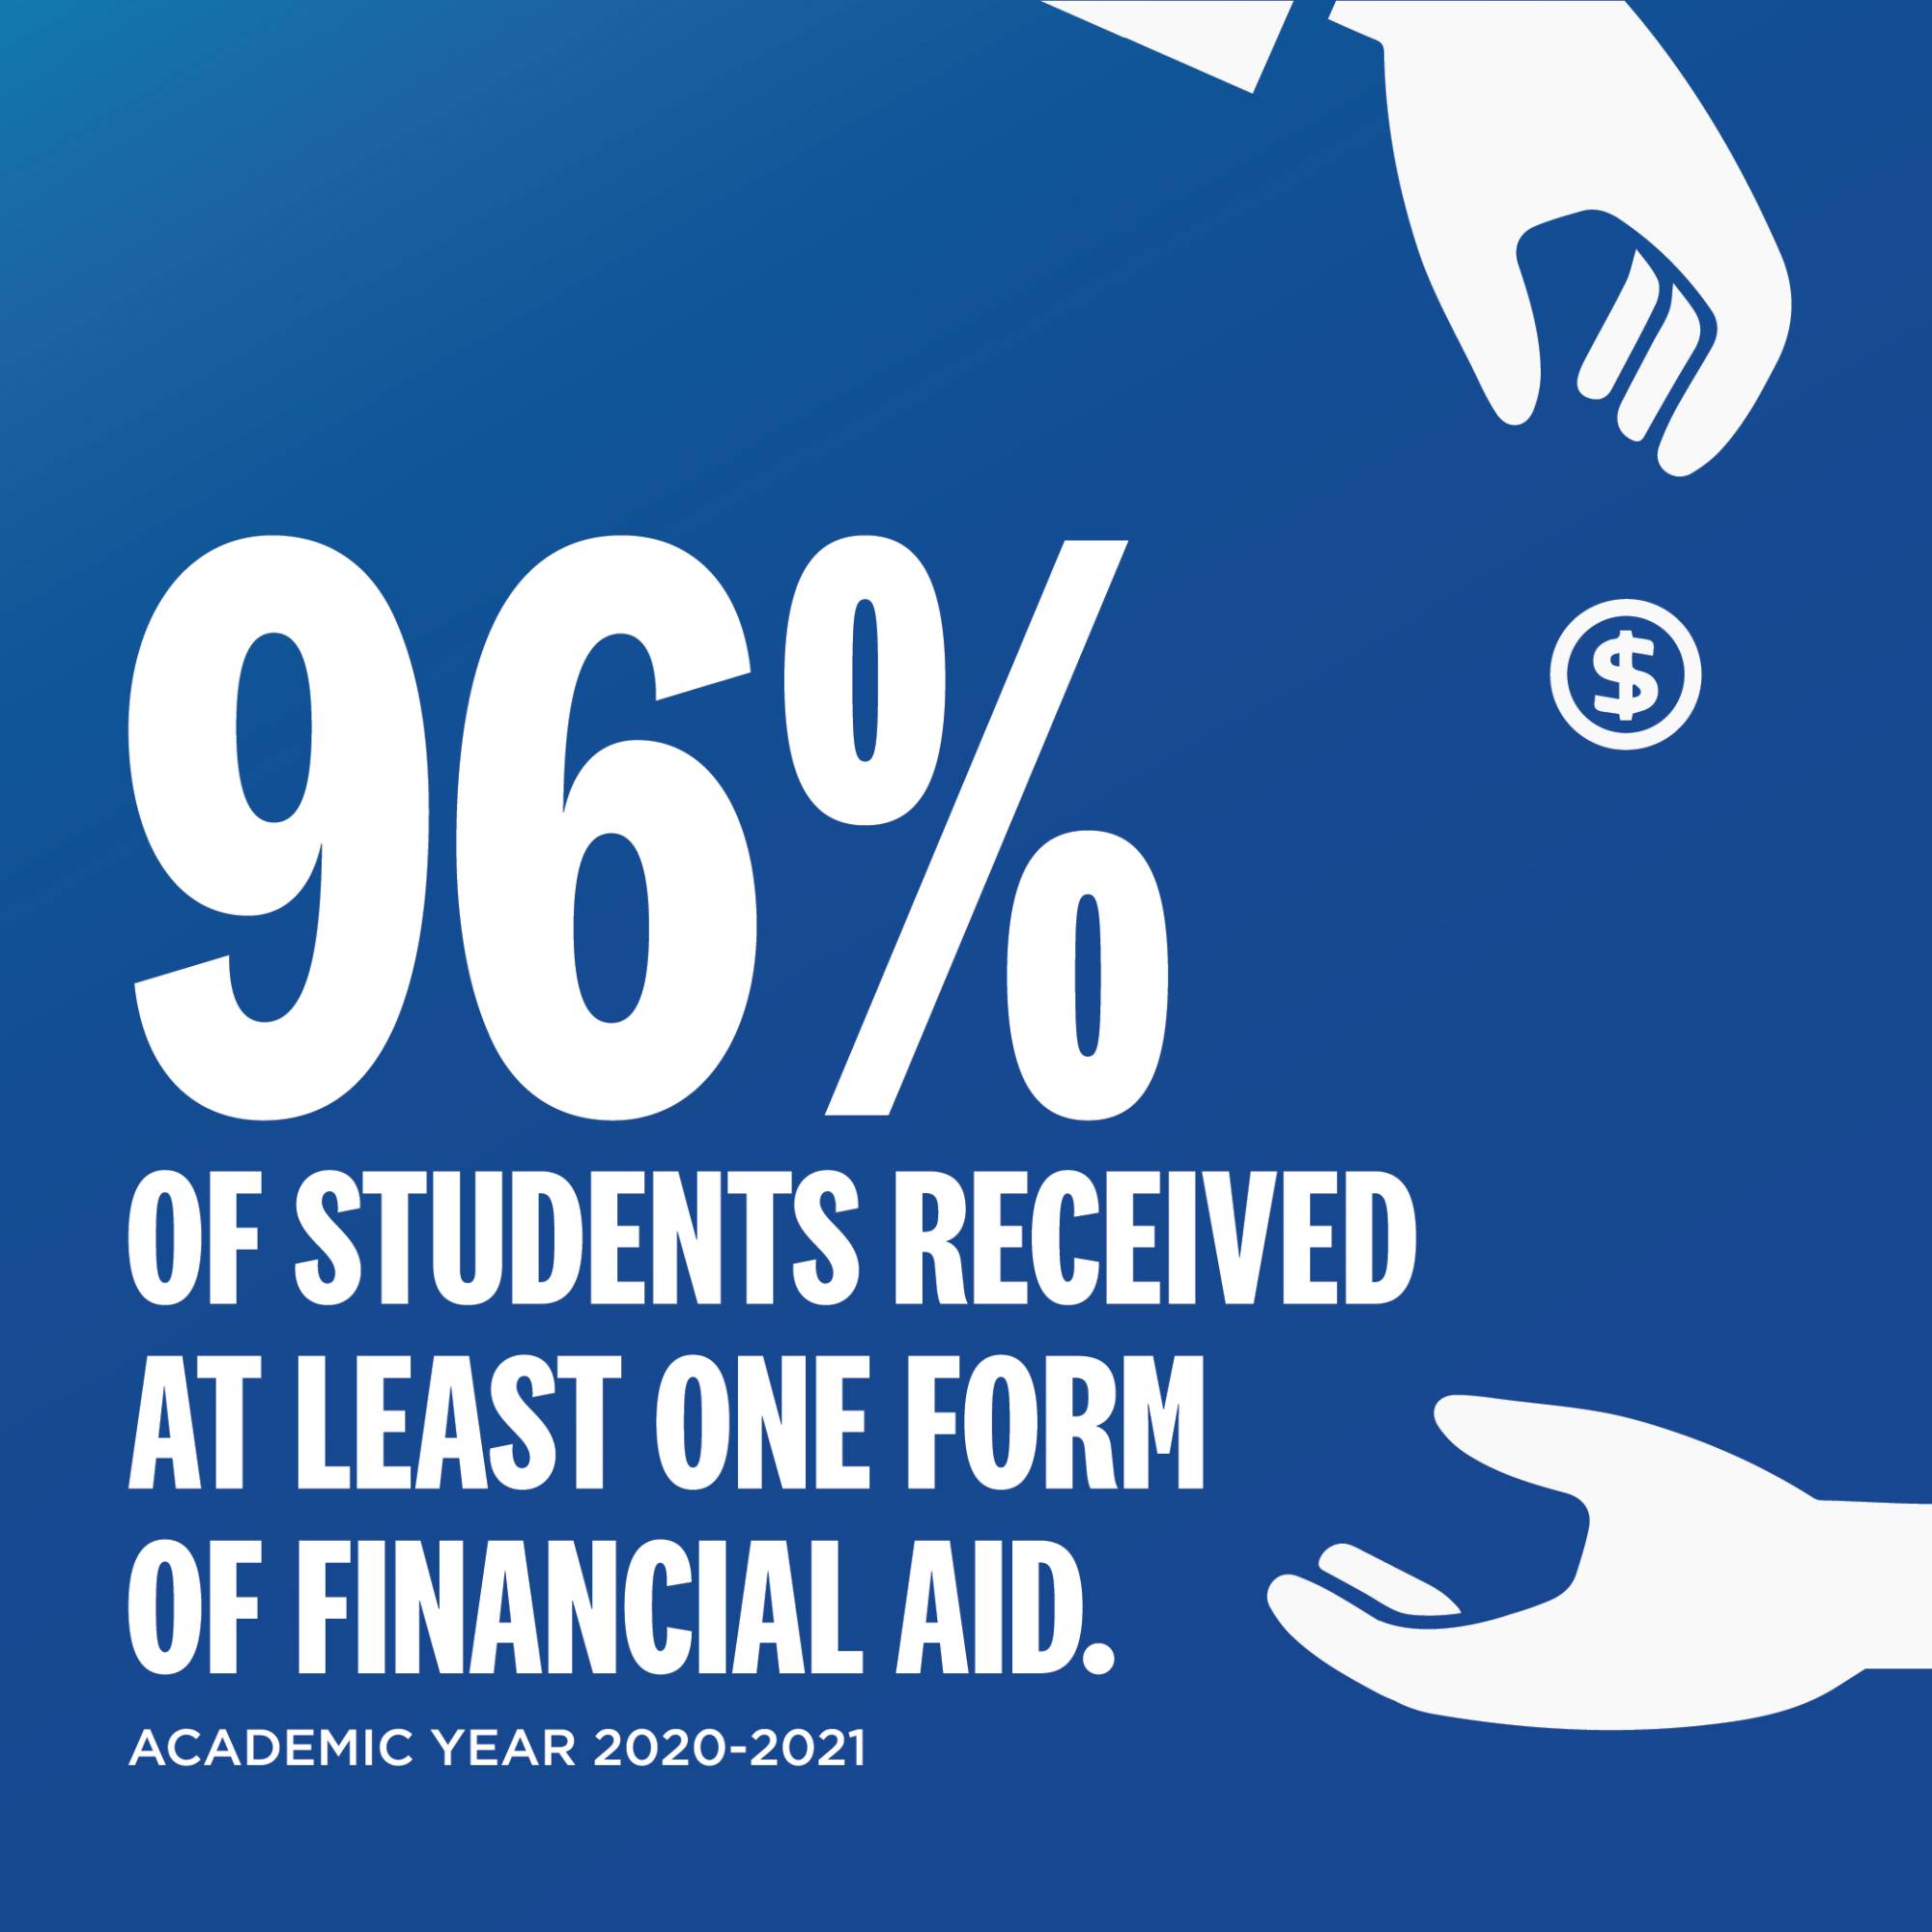 55% of students borrowed a loan